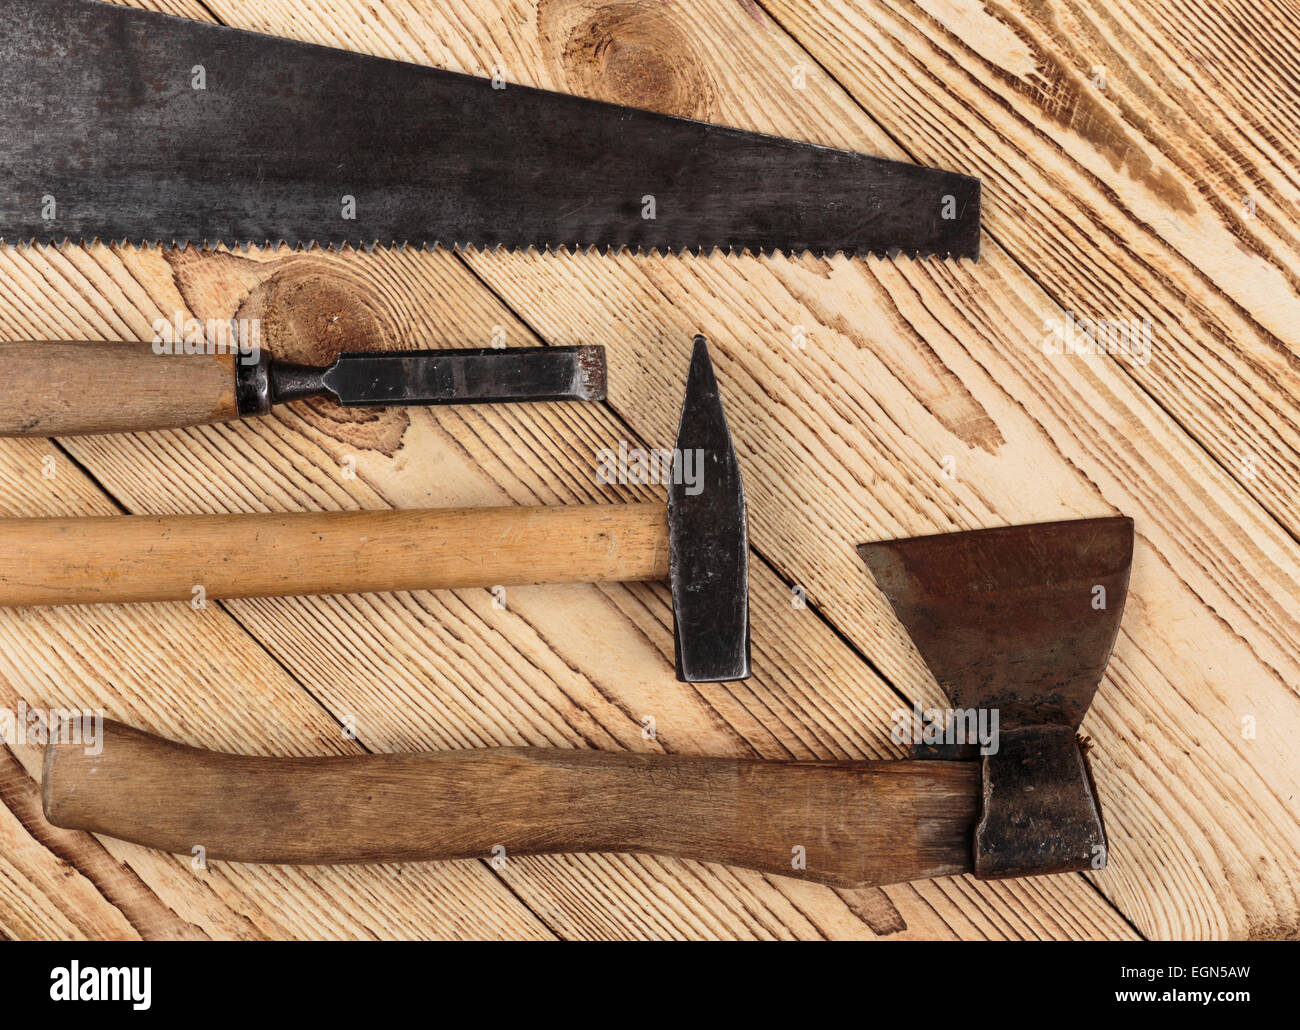 https://c8.alamy.com/compes/egn5aw/las-herramientas-de-la-carpinteria-antigua-sobre-un-fondo-de-madera-egn5aw.jpg